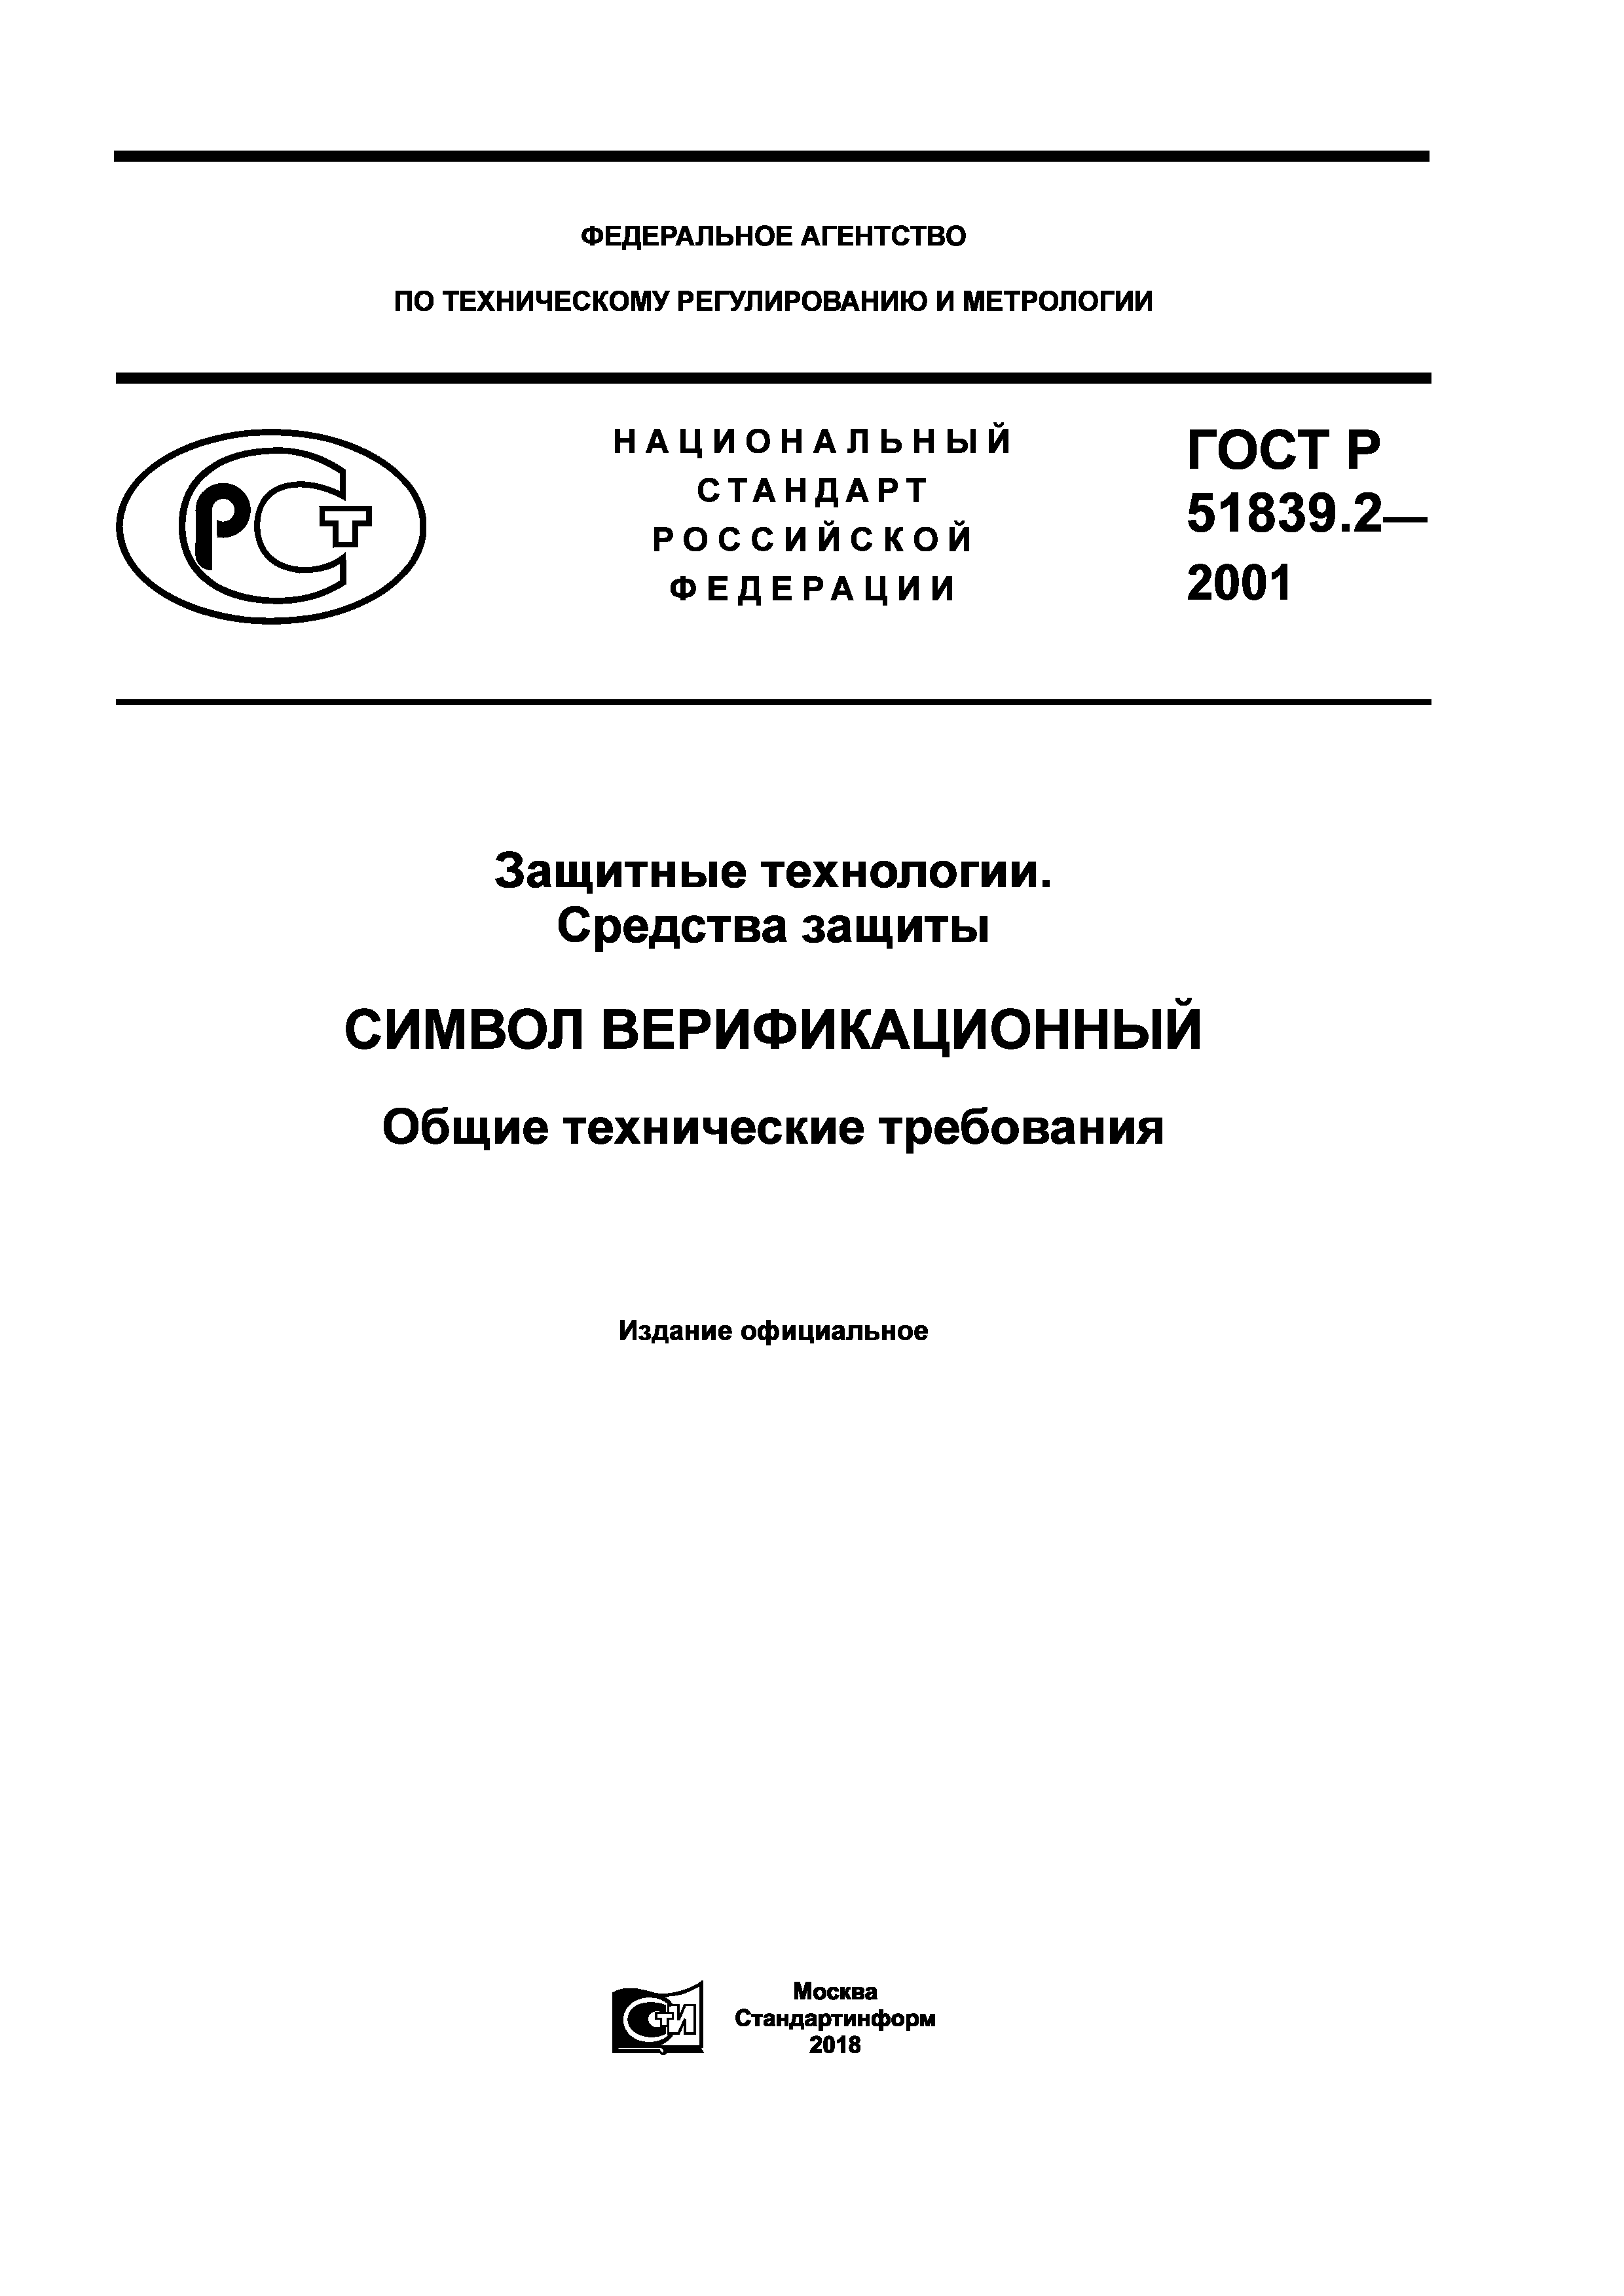 ГОСТ Р 51839.2-2001